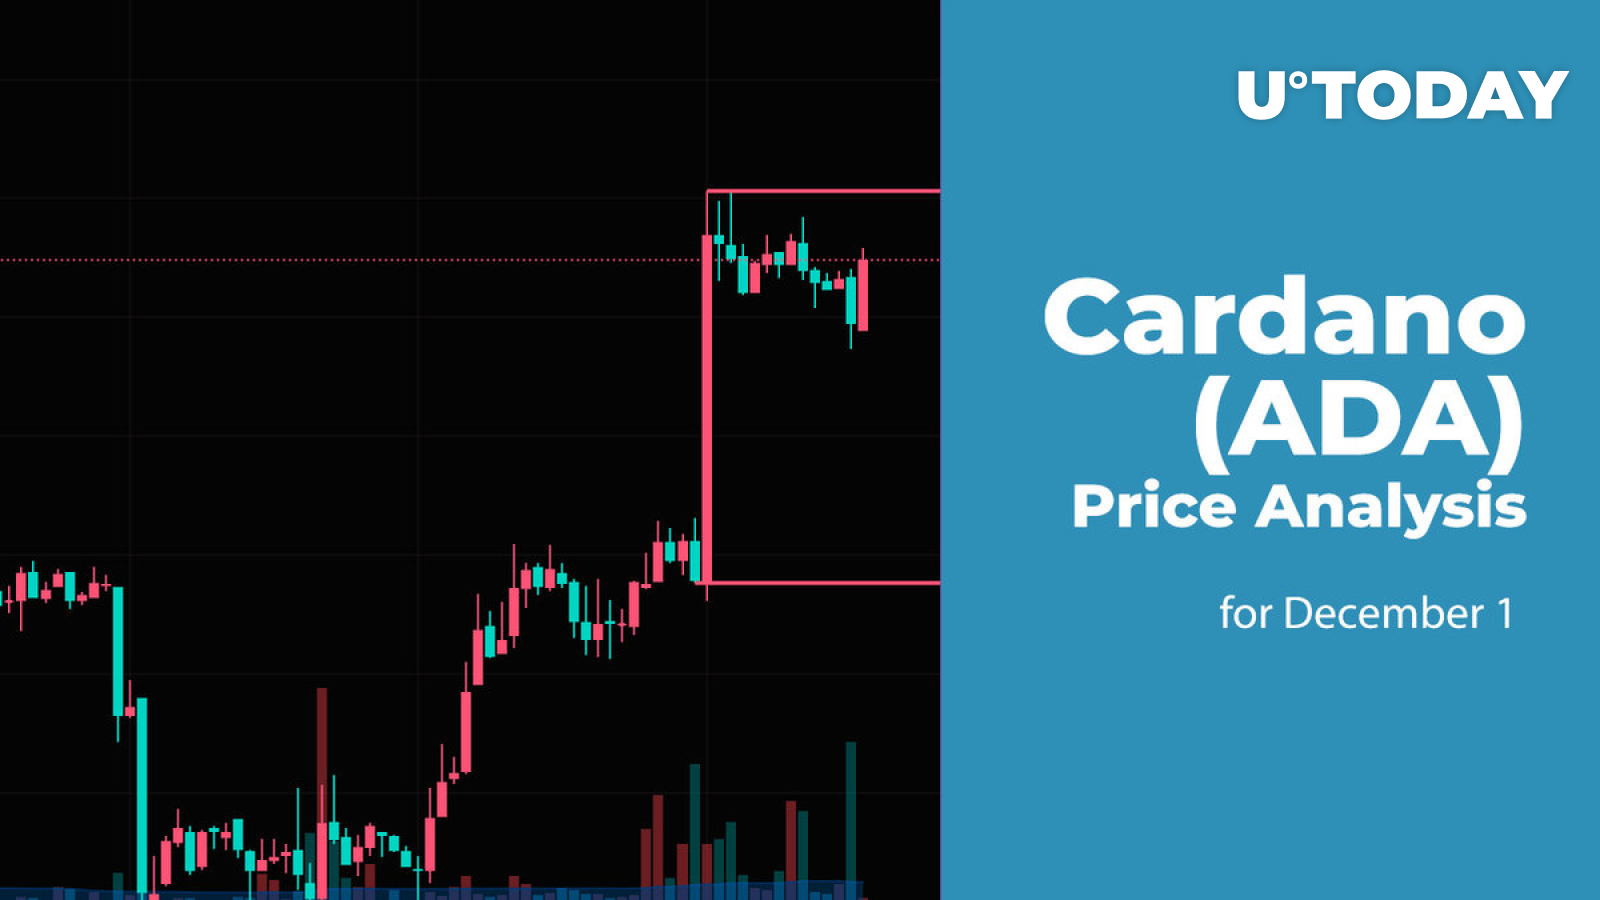 Cardano (ADA) Price Analysis for December 1